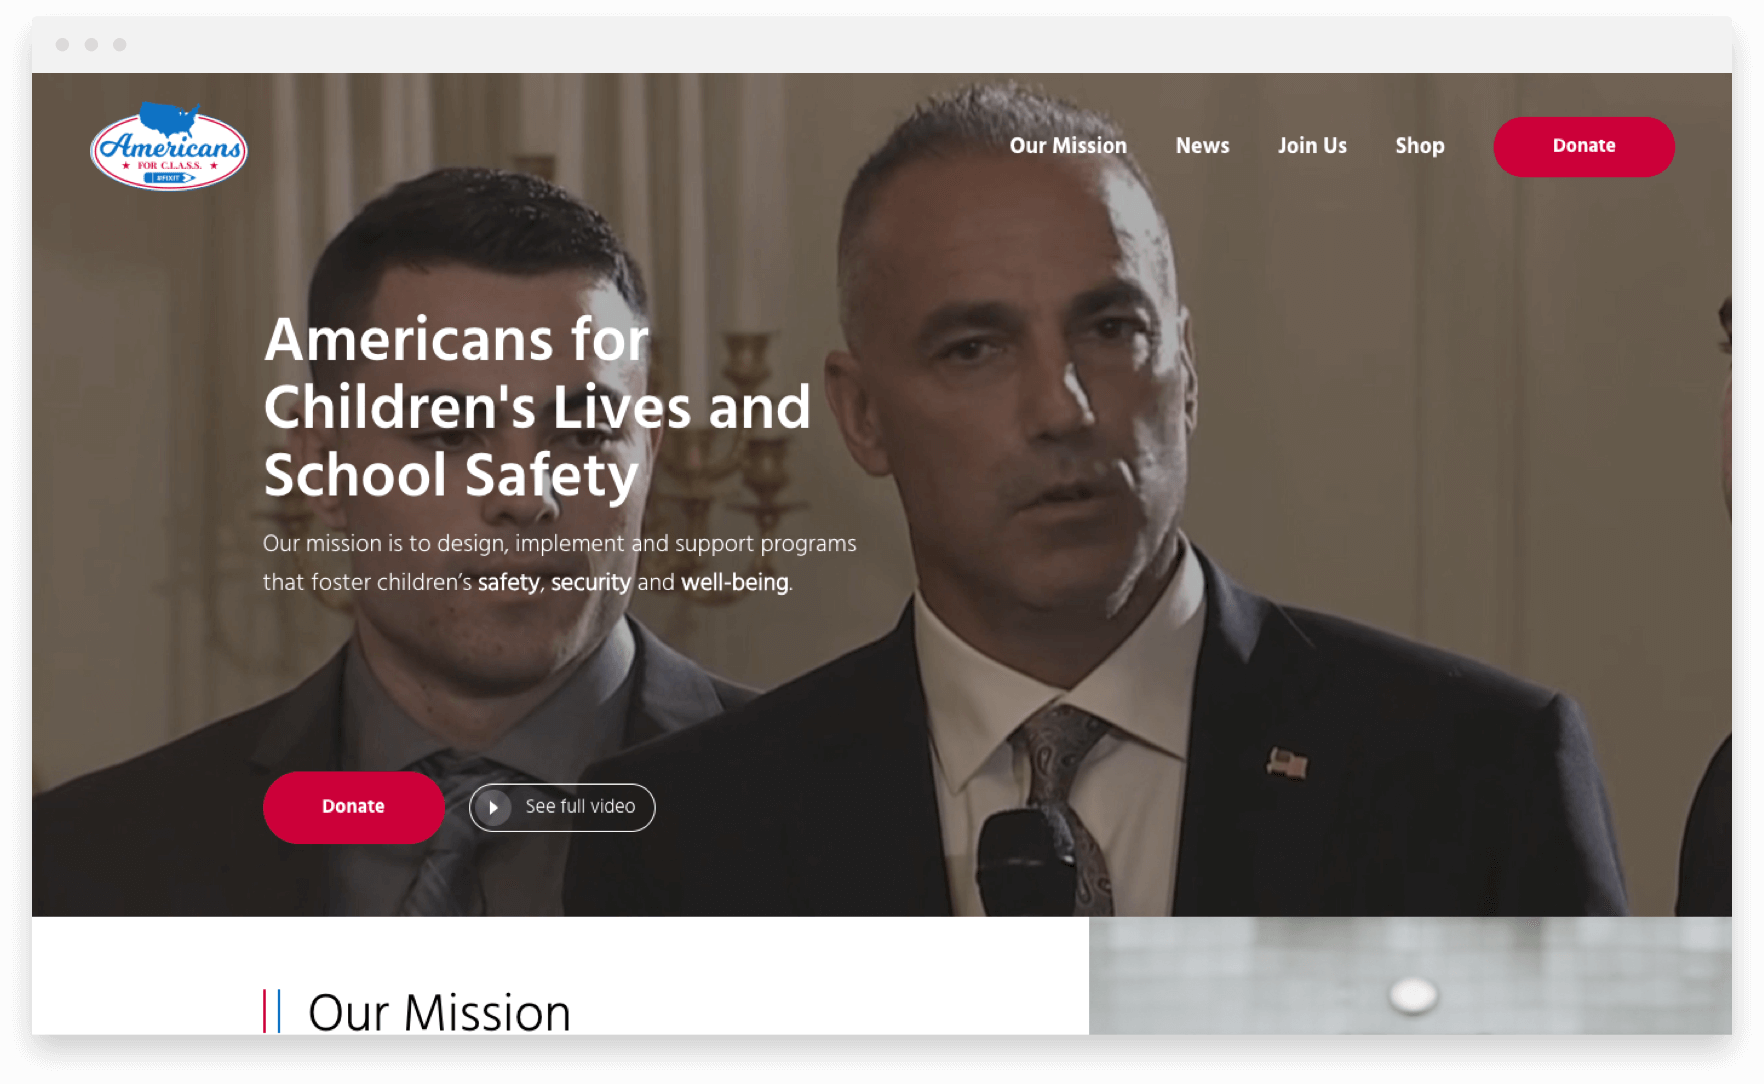 Americans for Class website seen on desktop